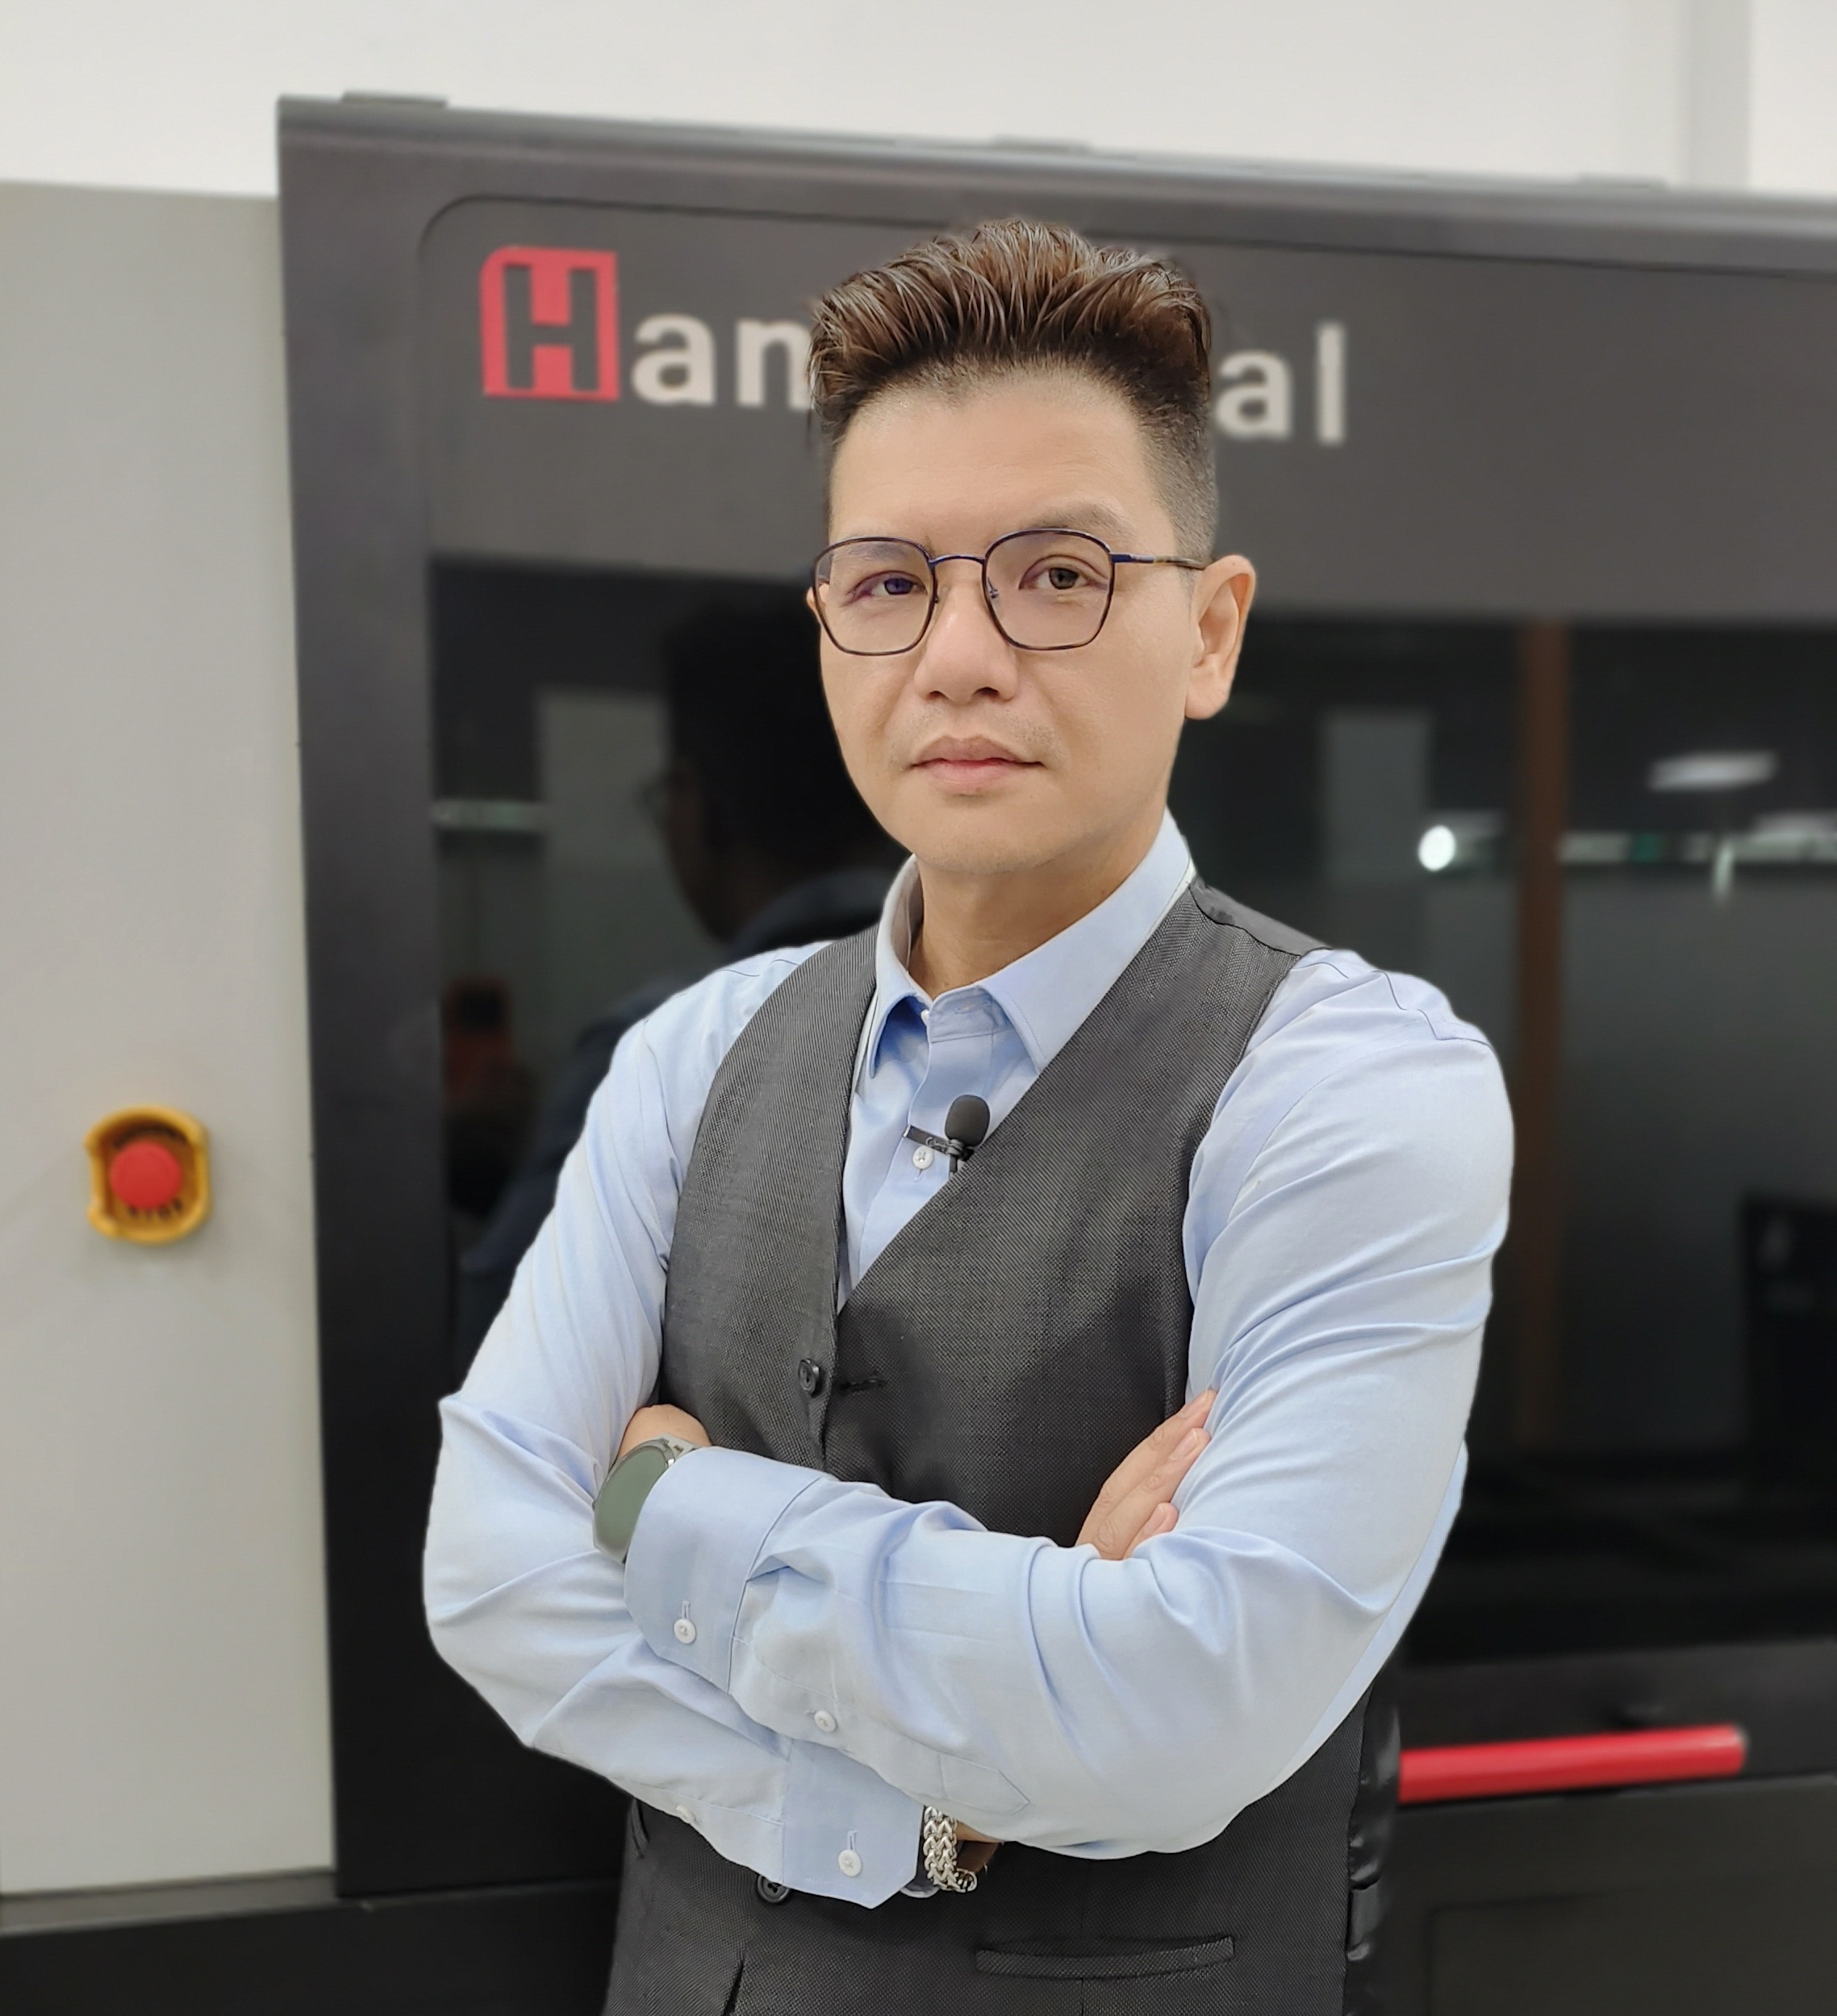 Johnson Lai, HanGlory Group brand director